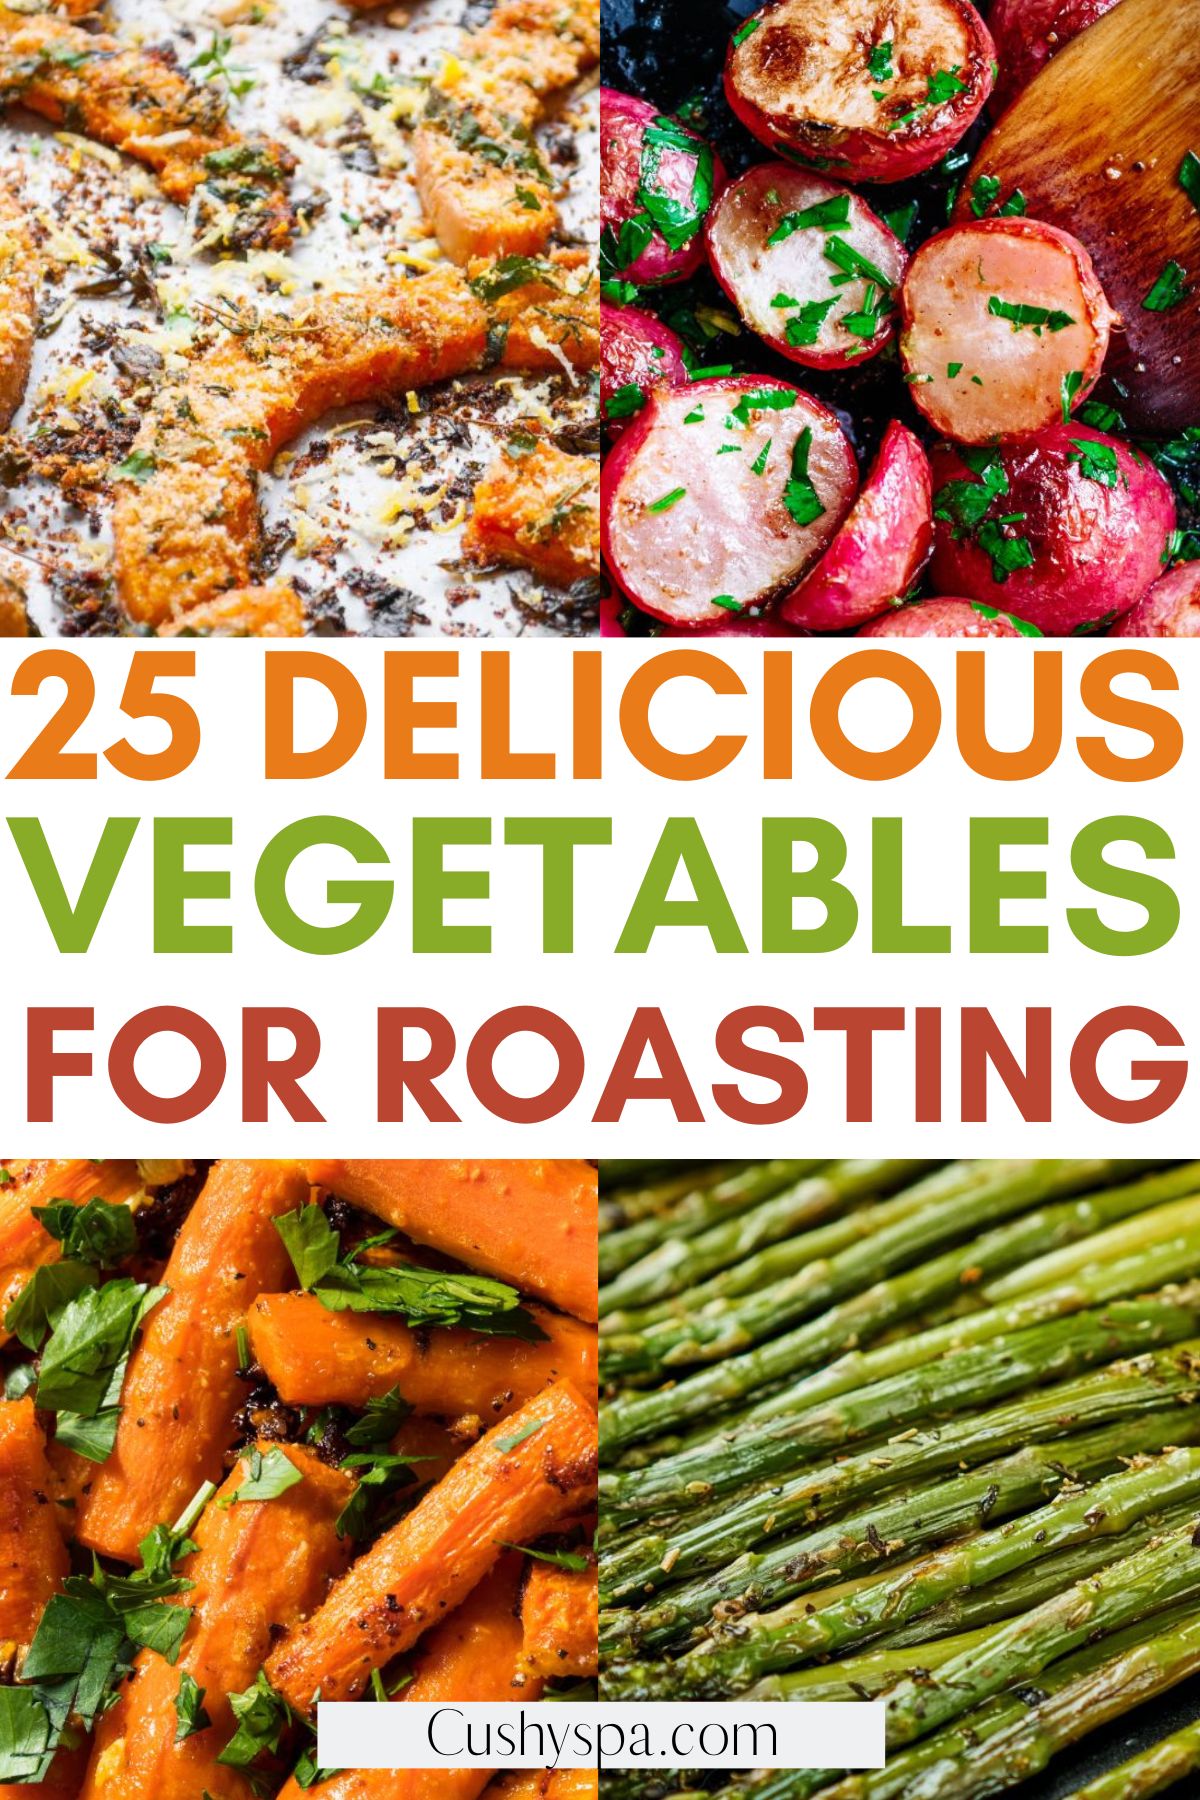 Vegetables for Roasting